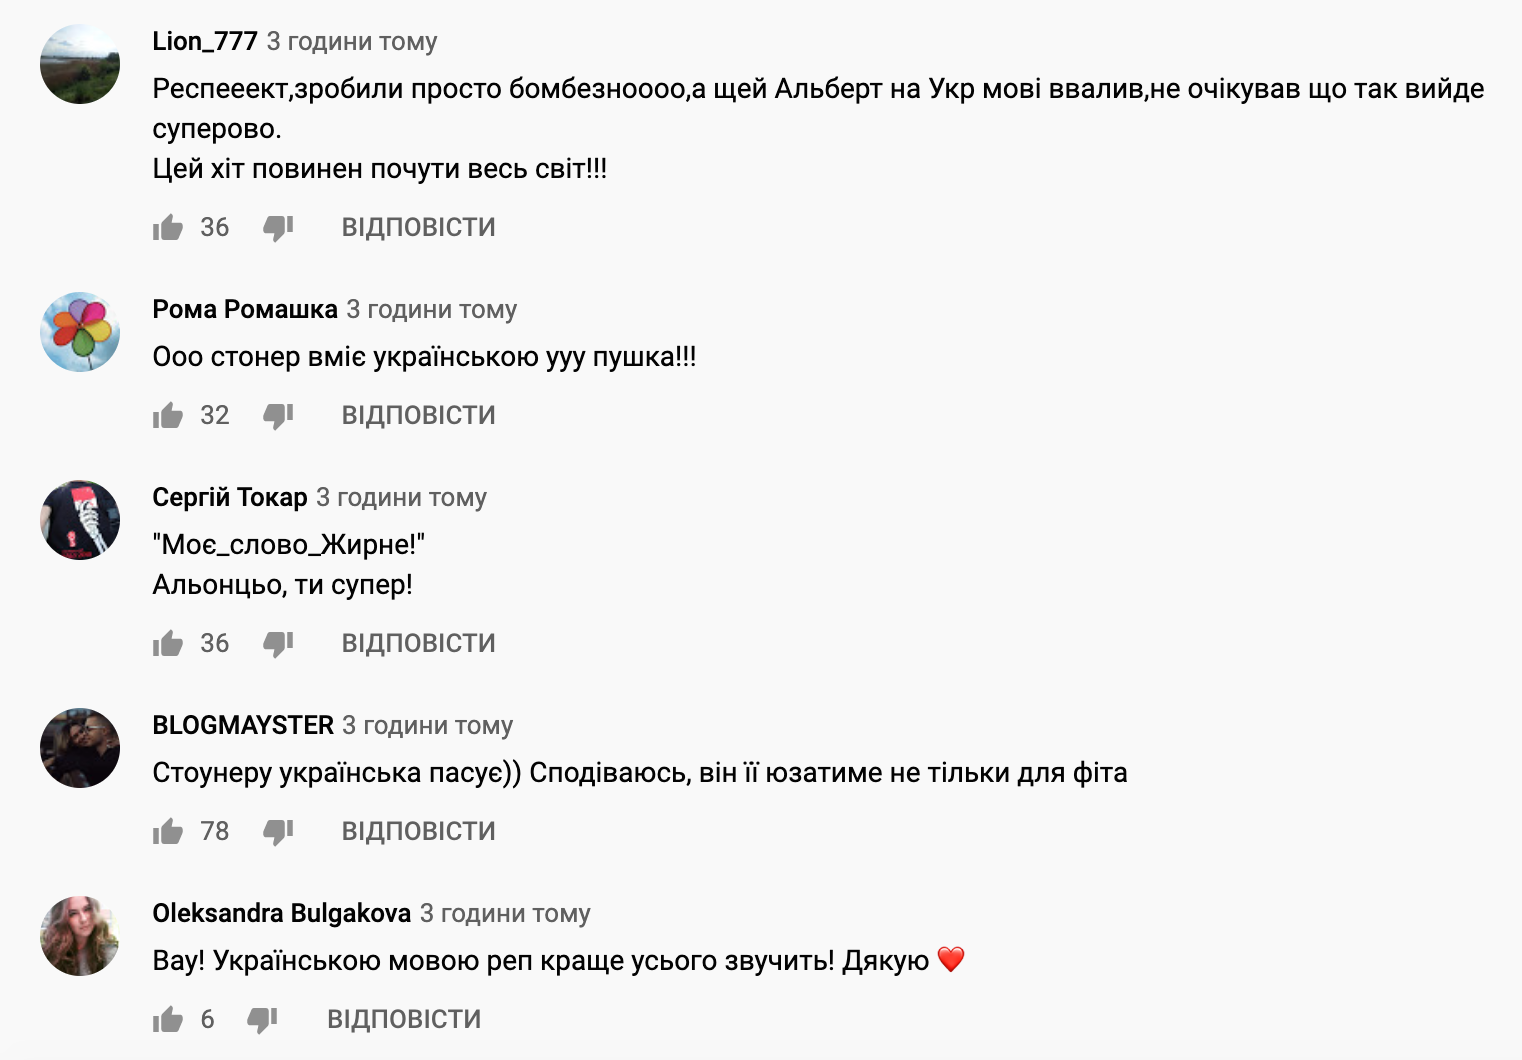 "Запел на украинском!" Alyona Alyona и Kyivstoner взорвали сеть хитом